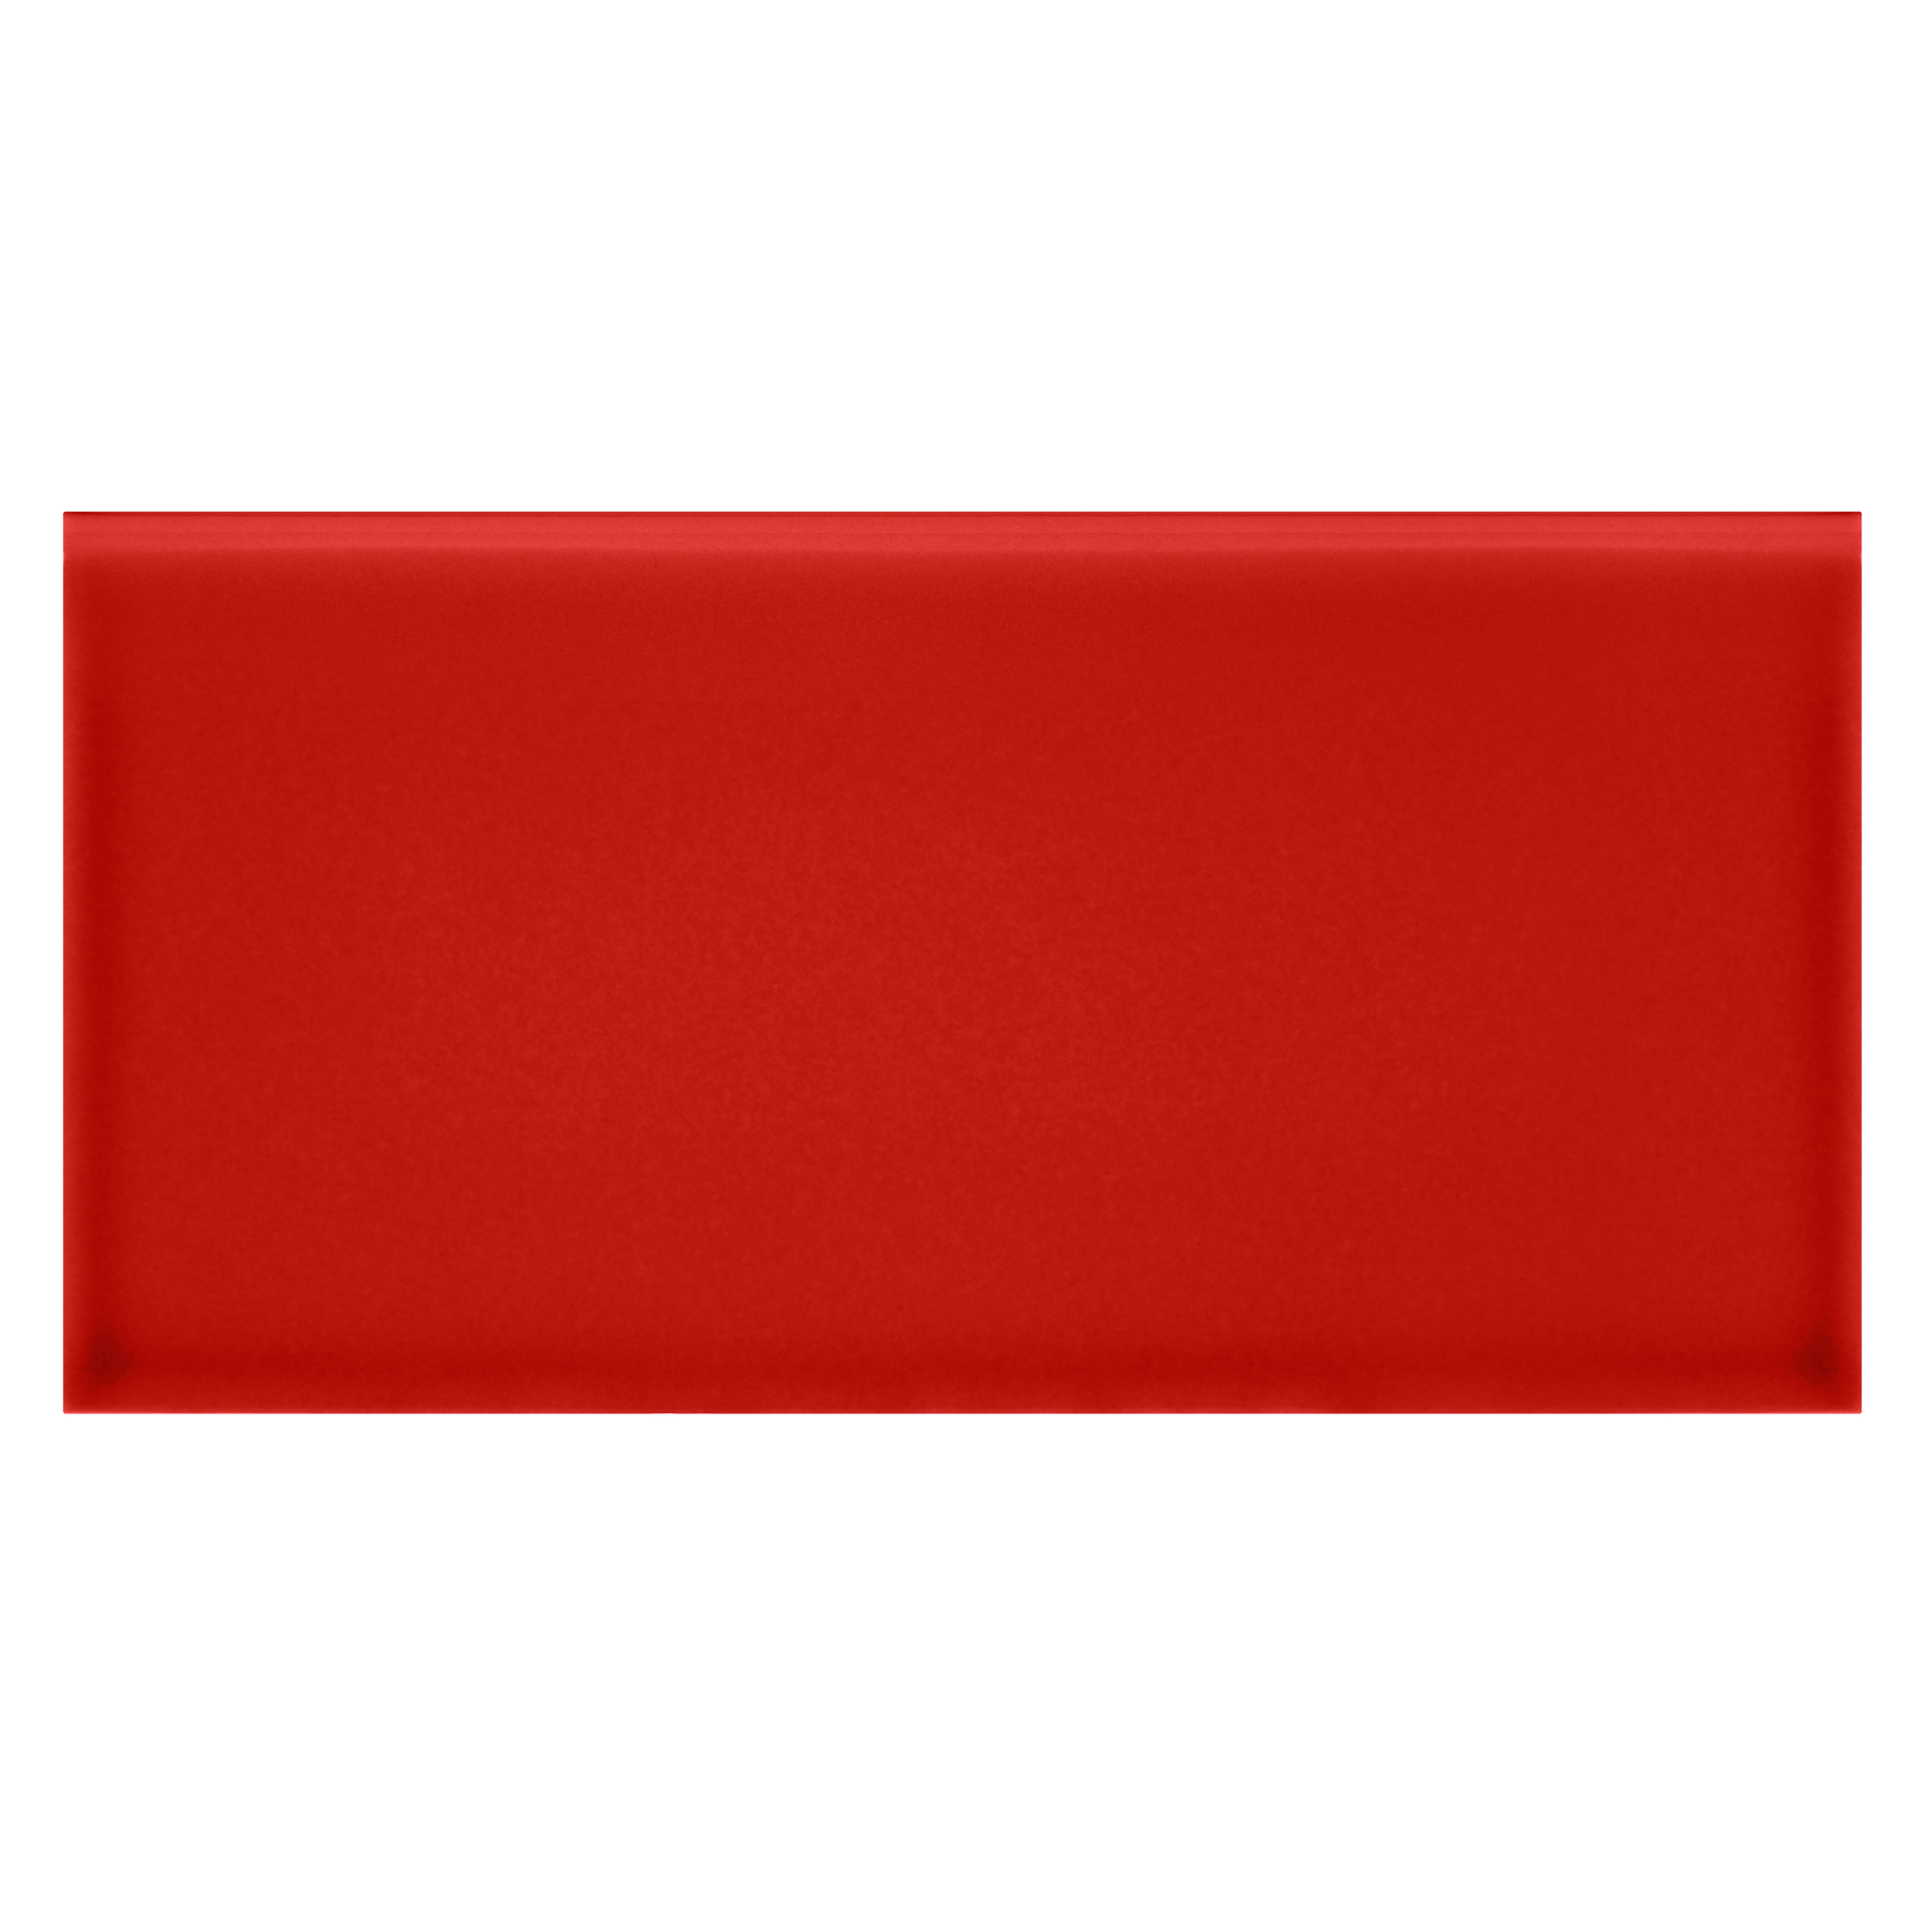 Imperial Red Gls (084) REL 7.5x15cm